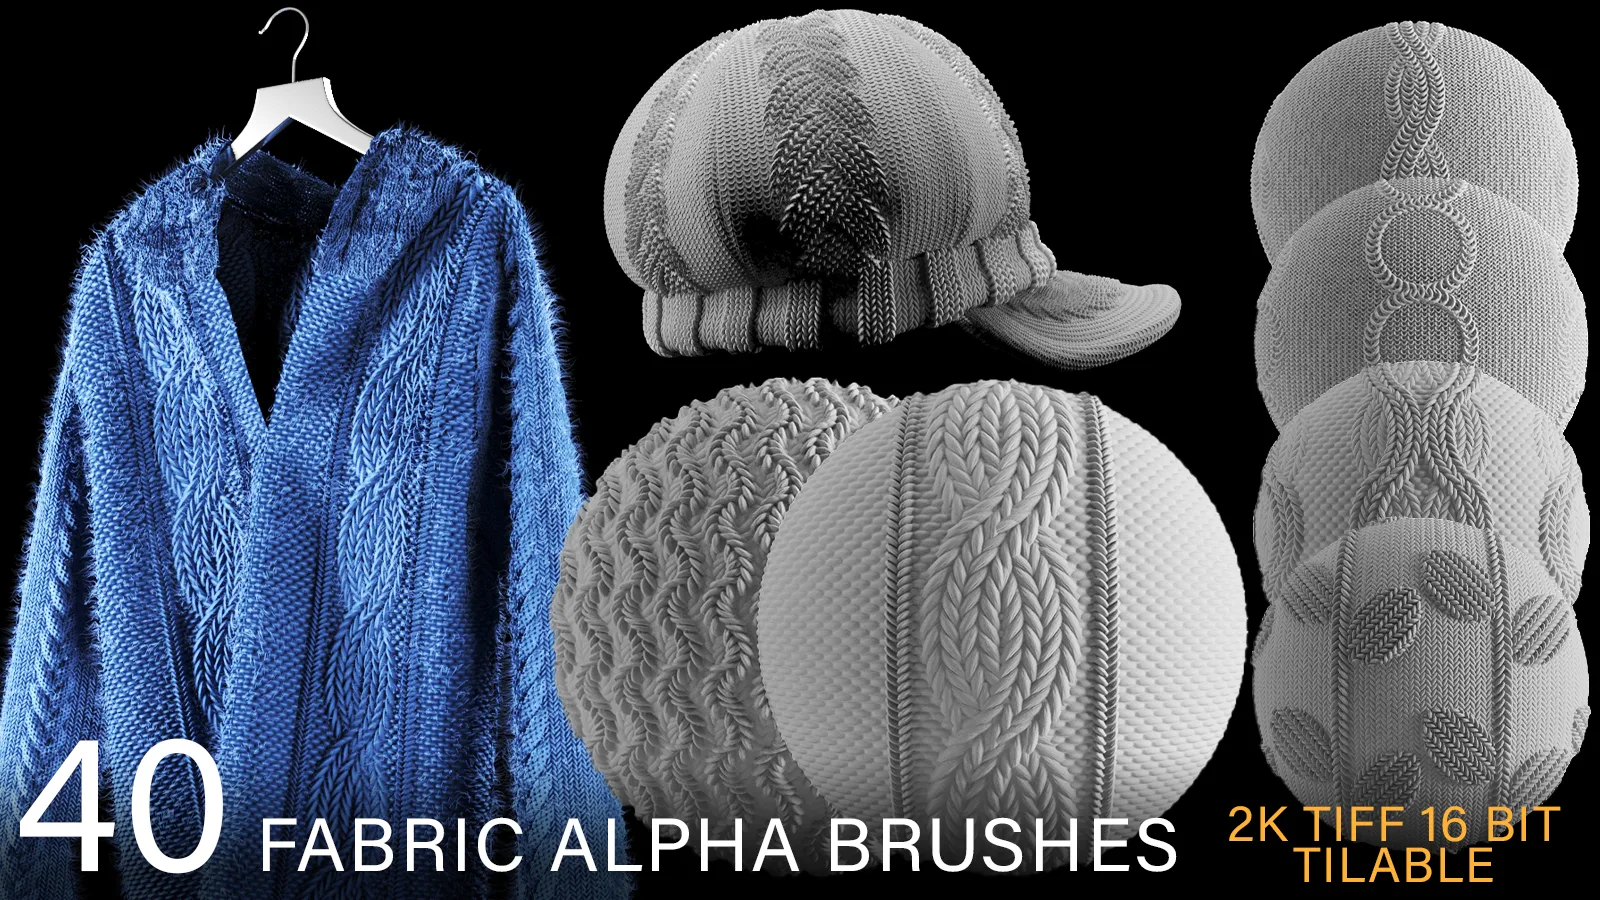 40 fabric alpha brush bundle : TRICOT & KNITTED (2k tiff 16 bit) + FREE video